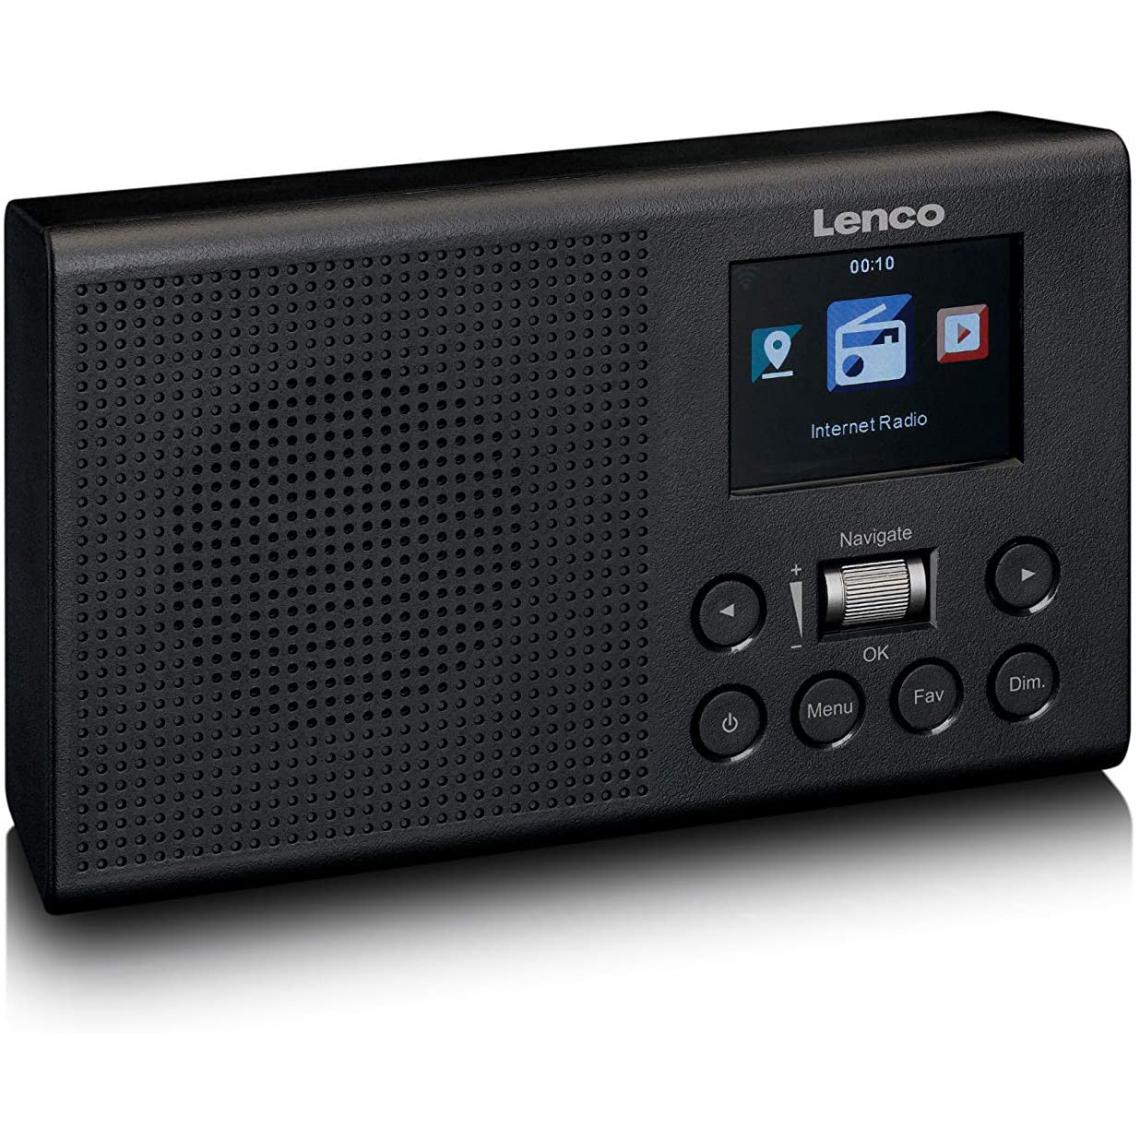 Lenco - radio Internet Portable Dab+ FM wifi RMS 2W noir - Radio